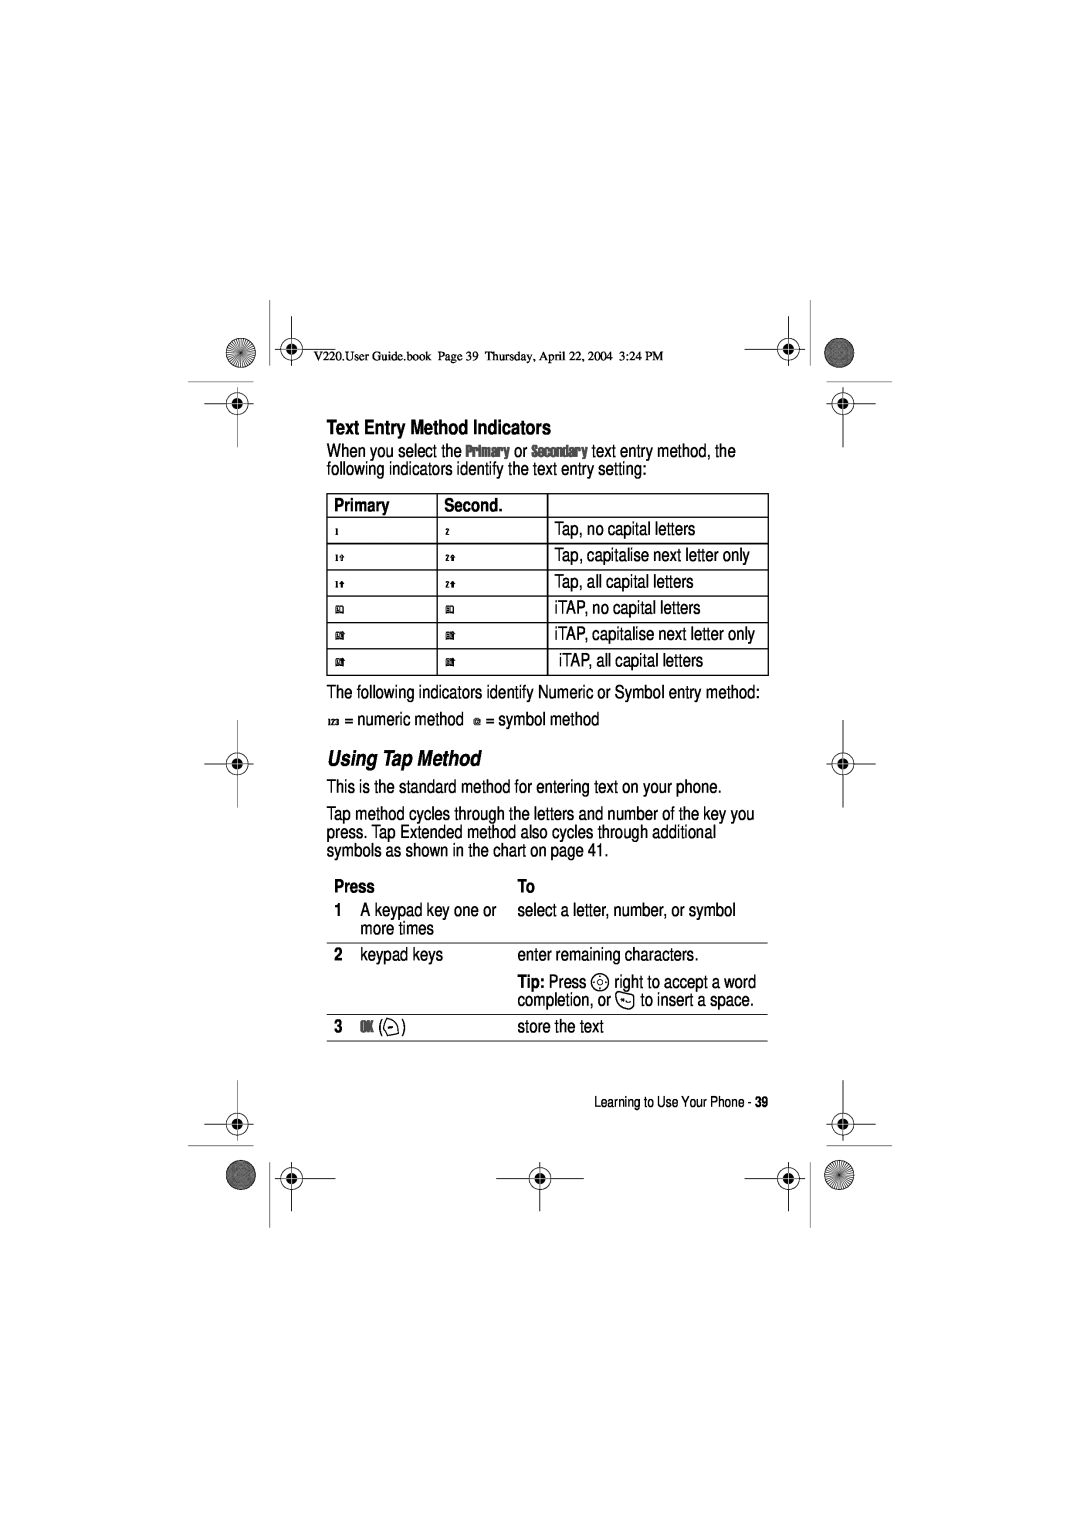 Motorola V220 manual Using Tap Method, Text Entry Method Indicators, 2. + 